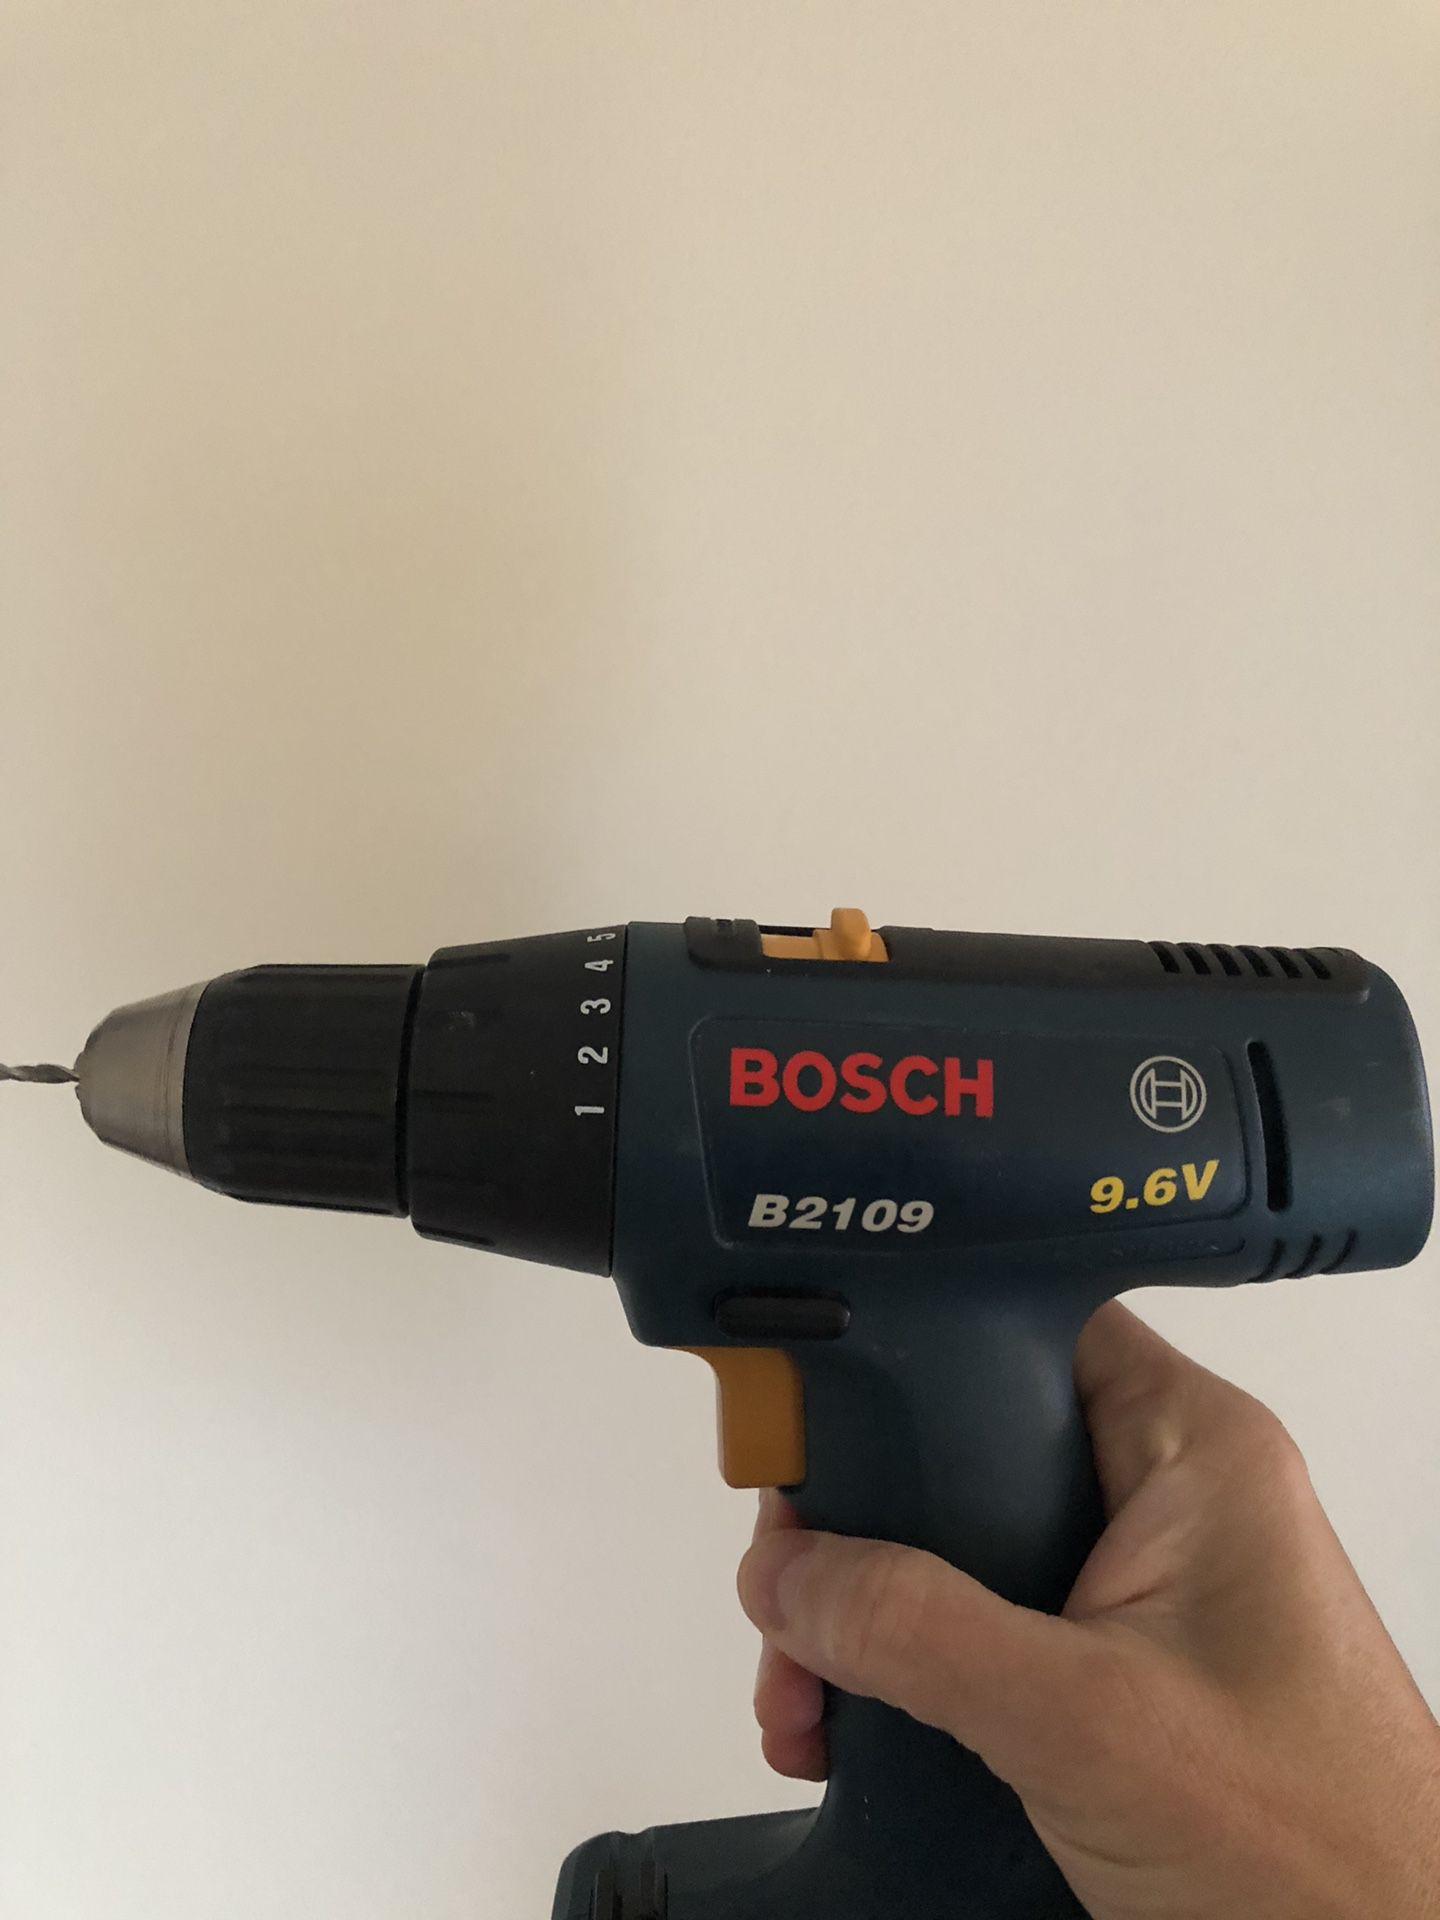 Bosch Cordless Drill